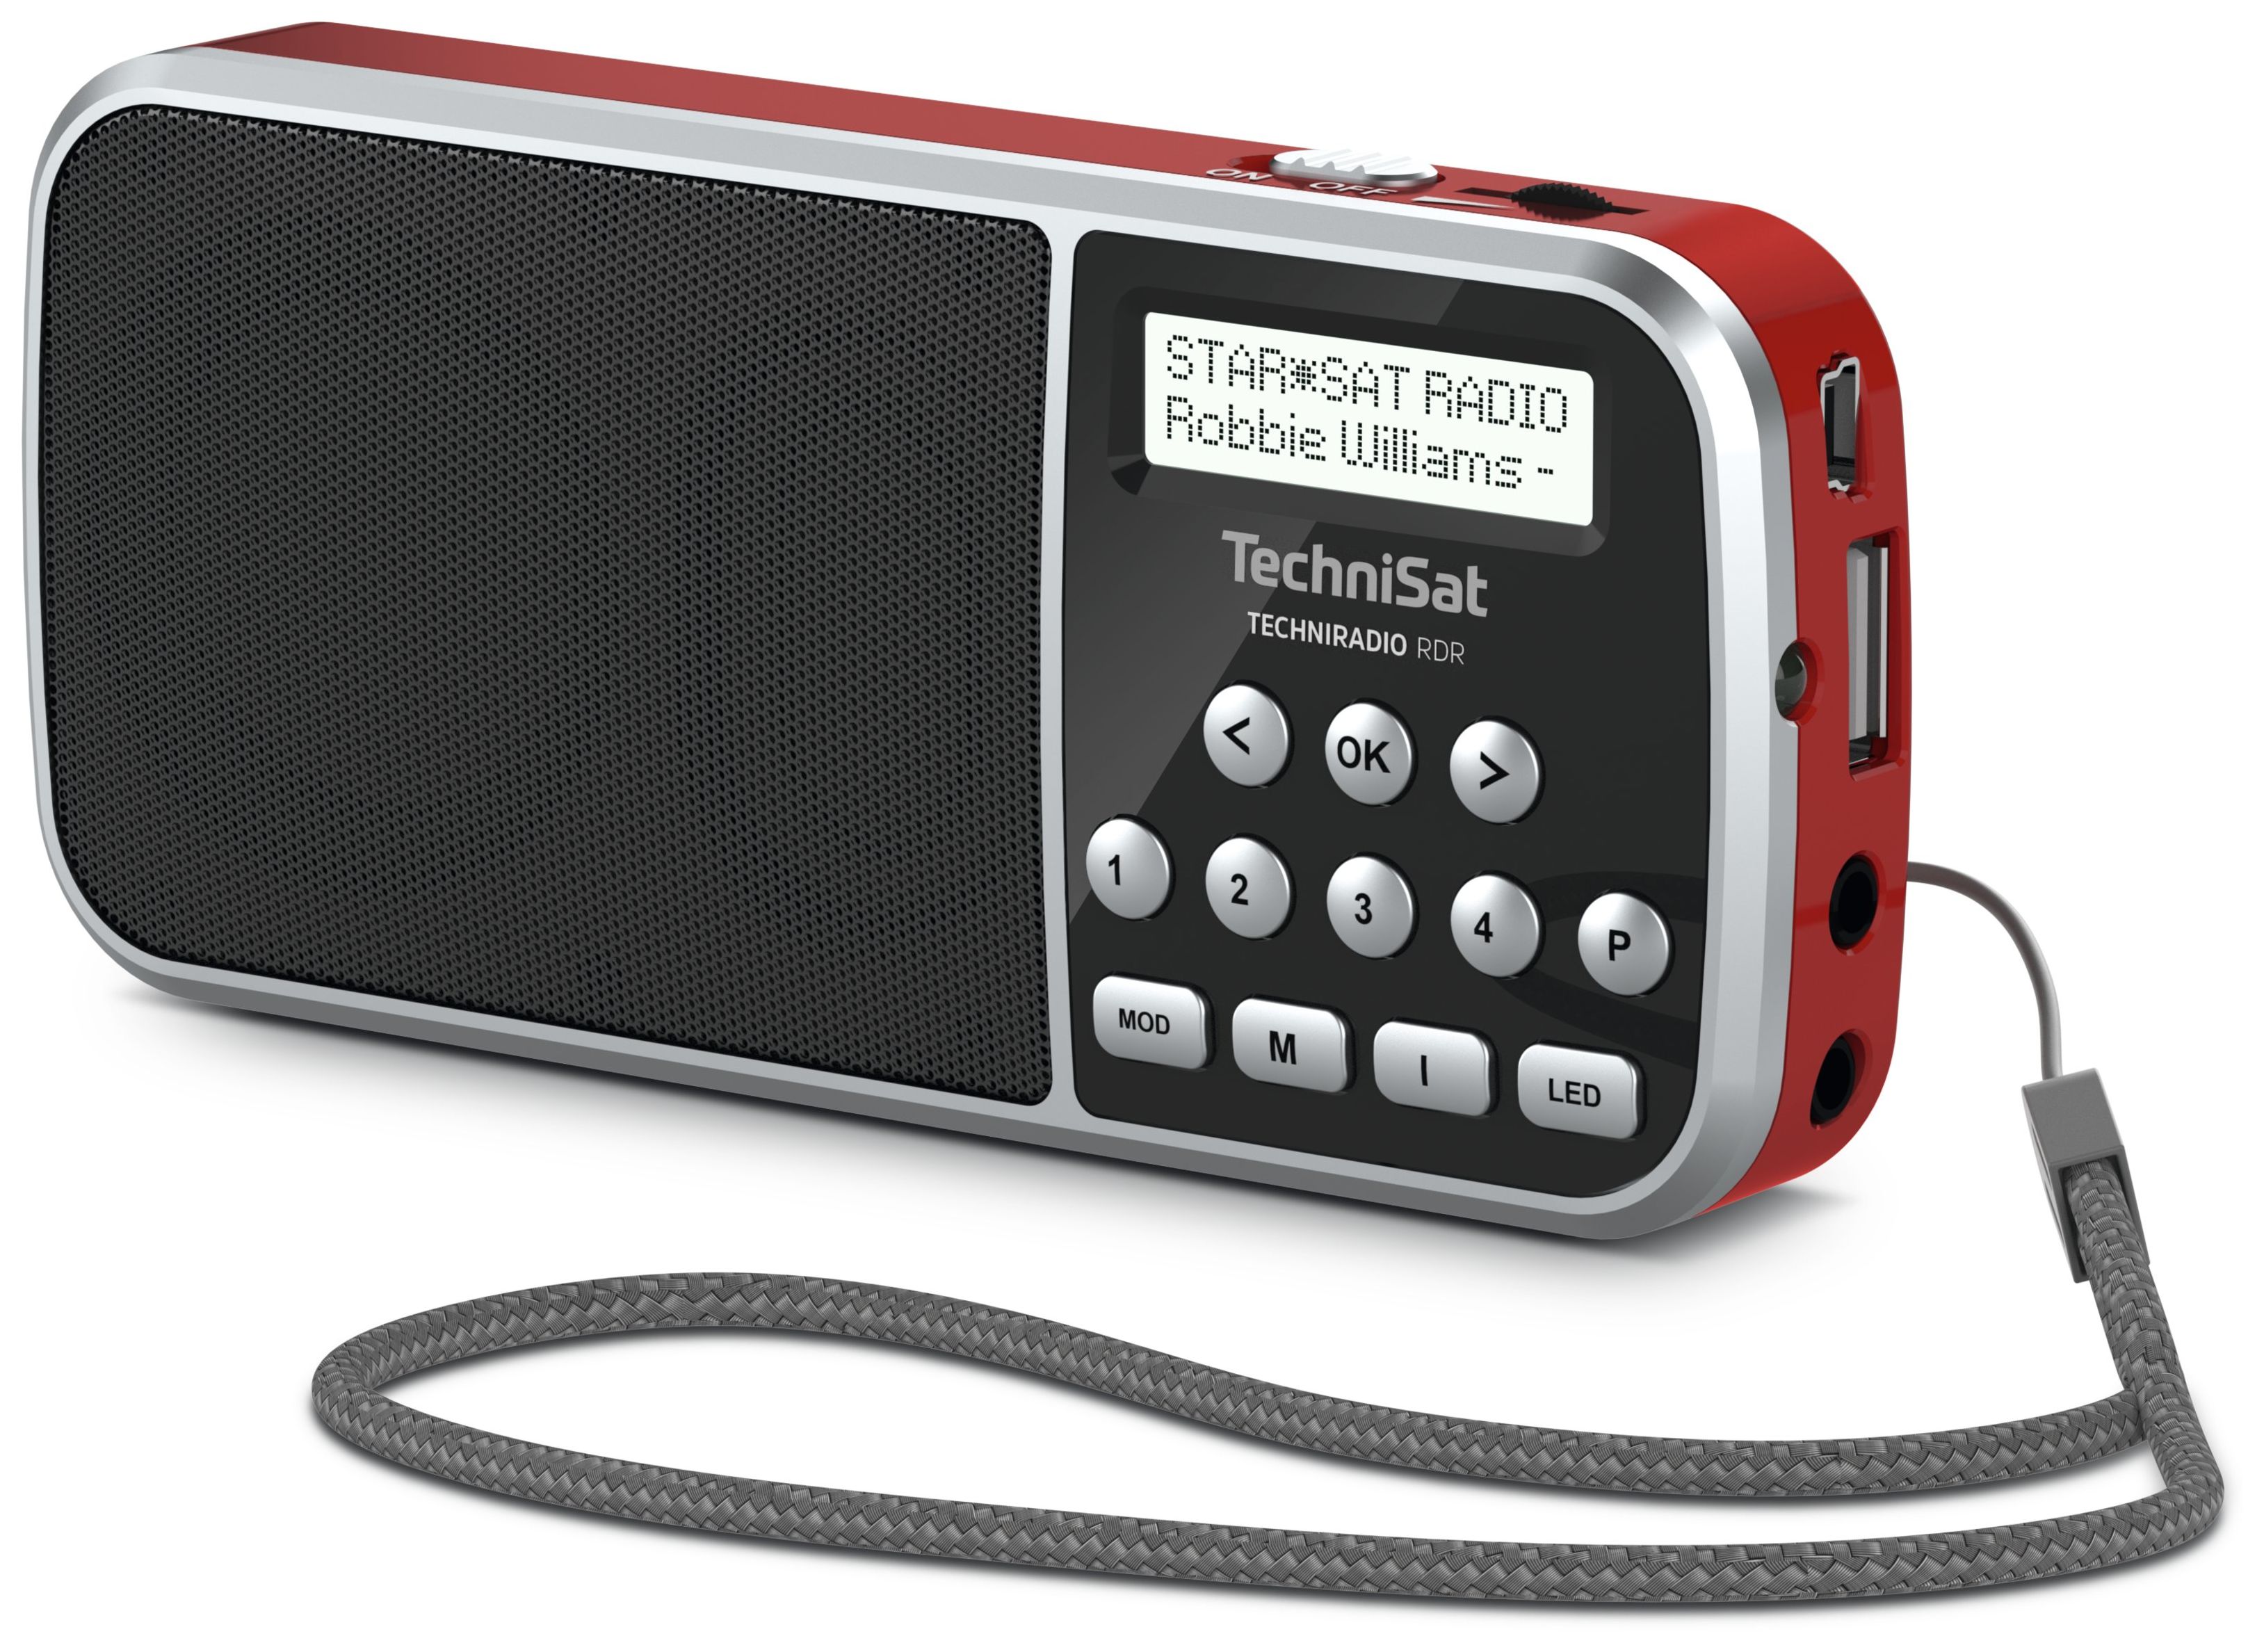 TechniSat TechniRadio RDR DAB+, FM Tragbar Radio (Rot) von expert  Technomarkt | Radios